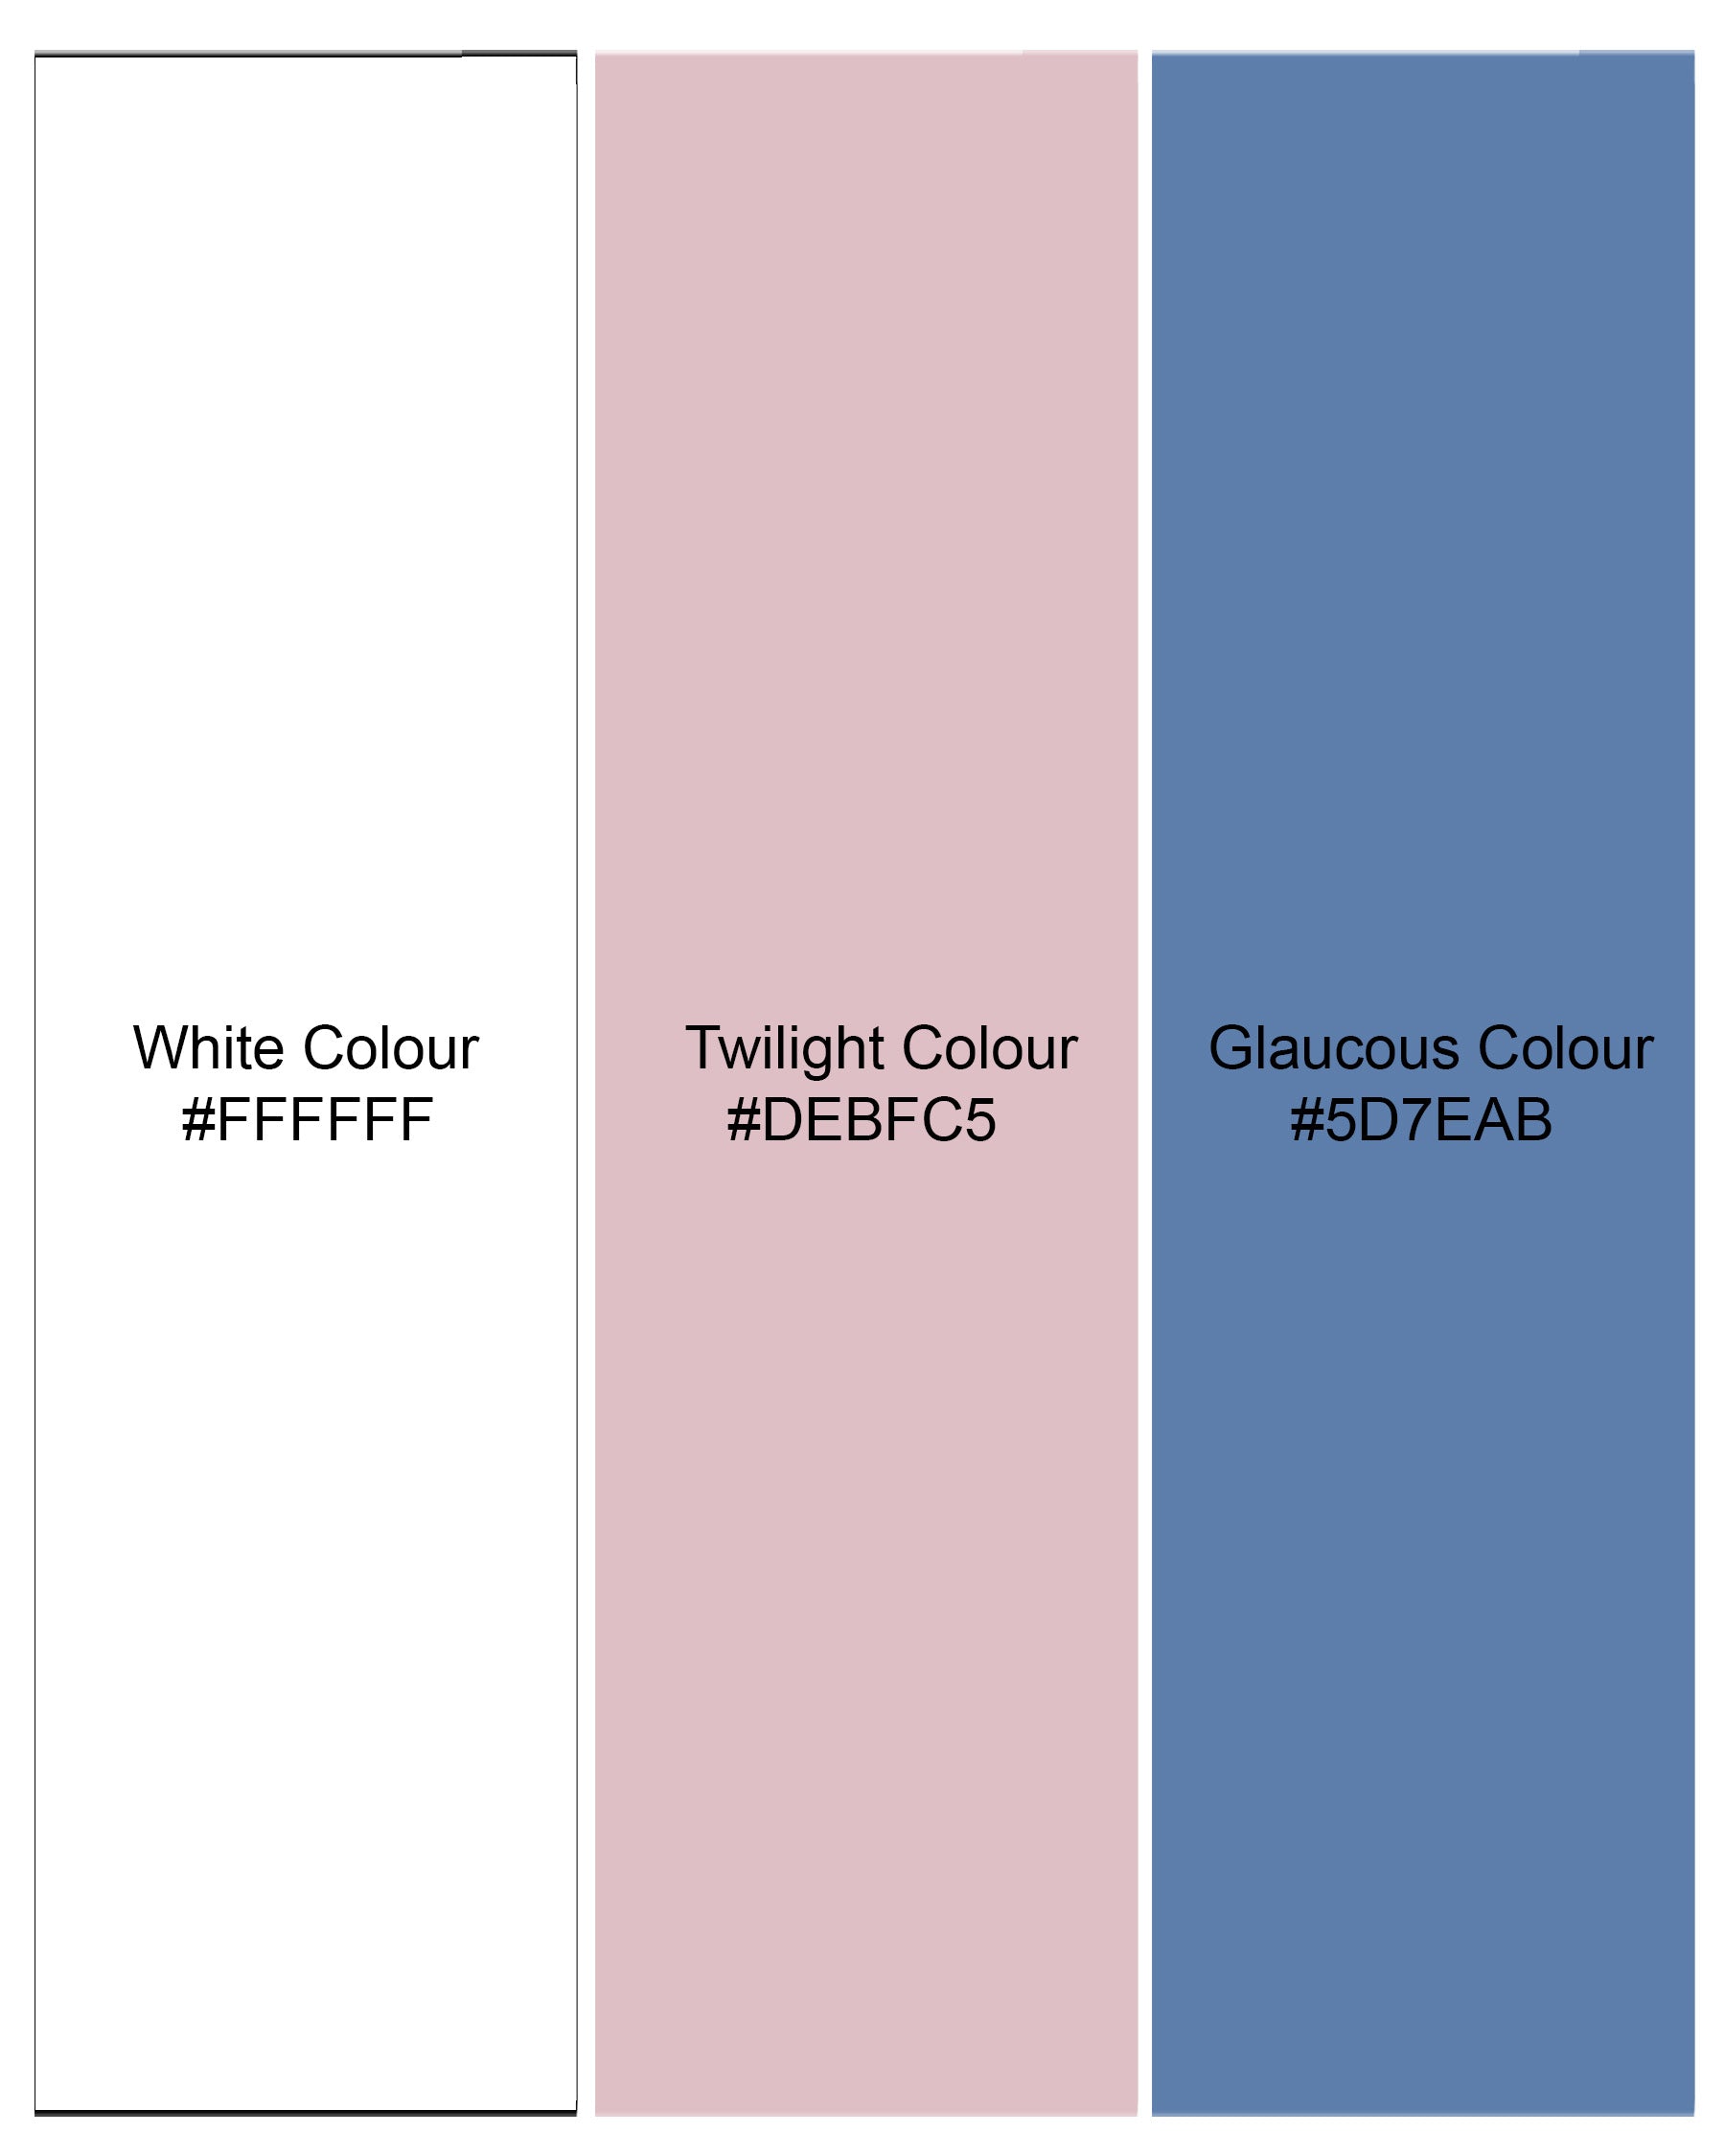 Twilight Pink With White Striped Dobby Textured  Premium Giza Cotton Shirt 7913-M-MN -38,7913-M-MN -H-38,7913-M-MN -39,7913-M-MN -H-39,7913-M-MN -40,7913-M-MN -H-40,7913-M-MN -42,7913-M-MN -H-42,7913-M-MN -44,7913-M-MN -H-44,7913-M-MN -46,7913-M-MN -H-46,7913-M-MN -48,7913-M-MN -H-48,7913-M-MN -50,7913-M-MN -H-50,7913-M-MN -52,7913-M-MN -H-52